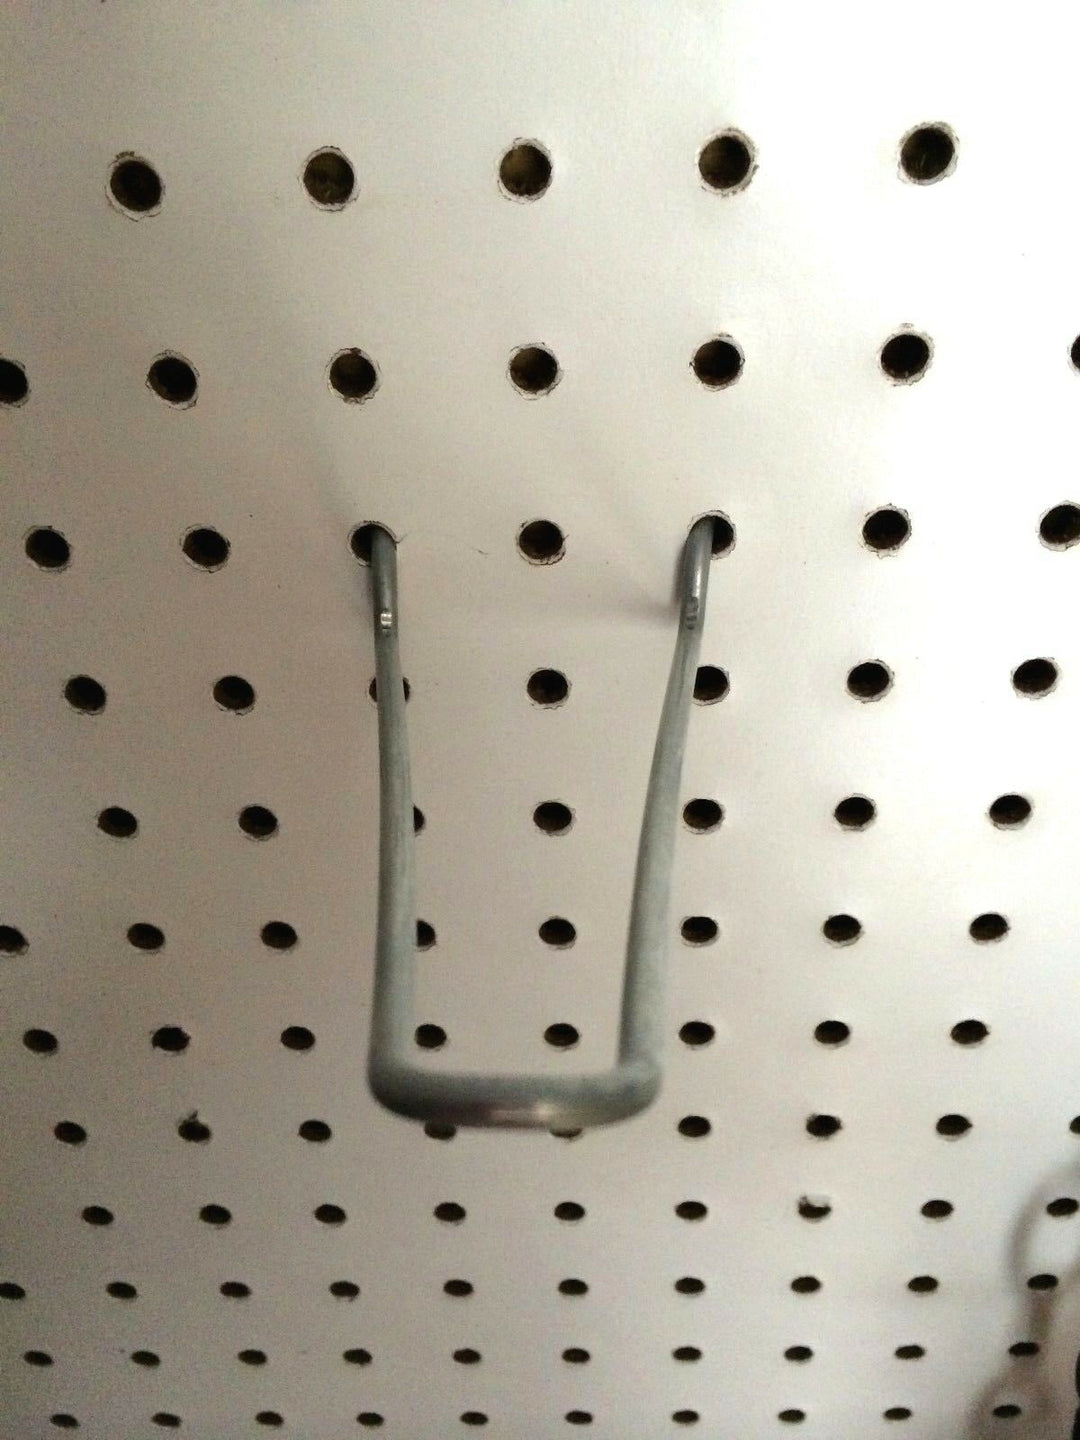 (20 PACK) 8 Inch Looped Metal Peg Hooks w /Elevated Tip Fits1/8 & 1/4 Pegboard